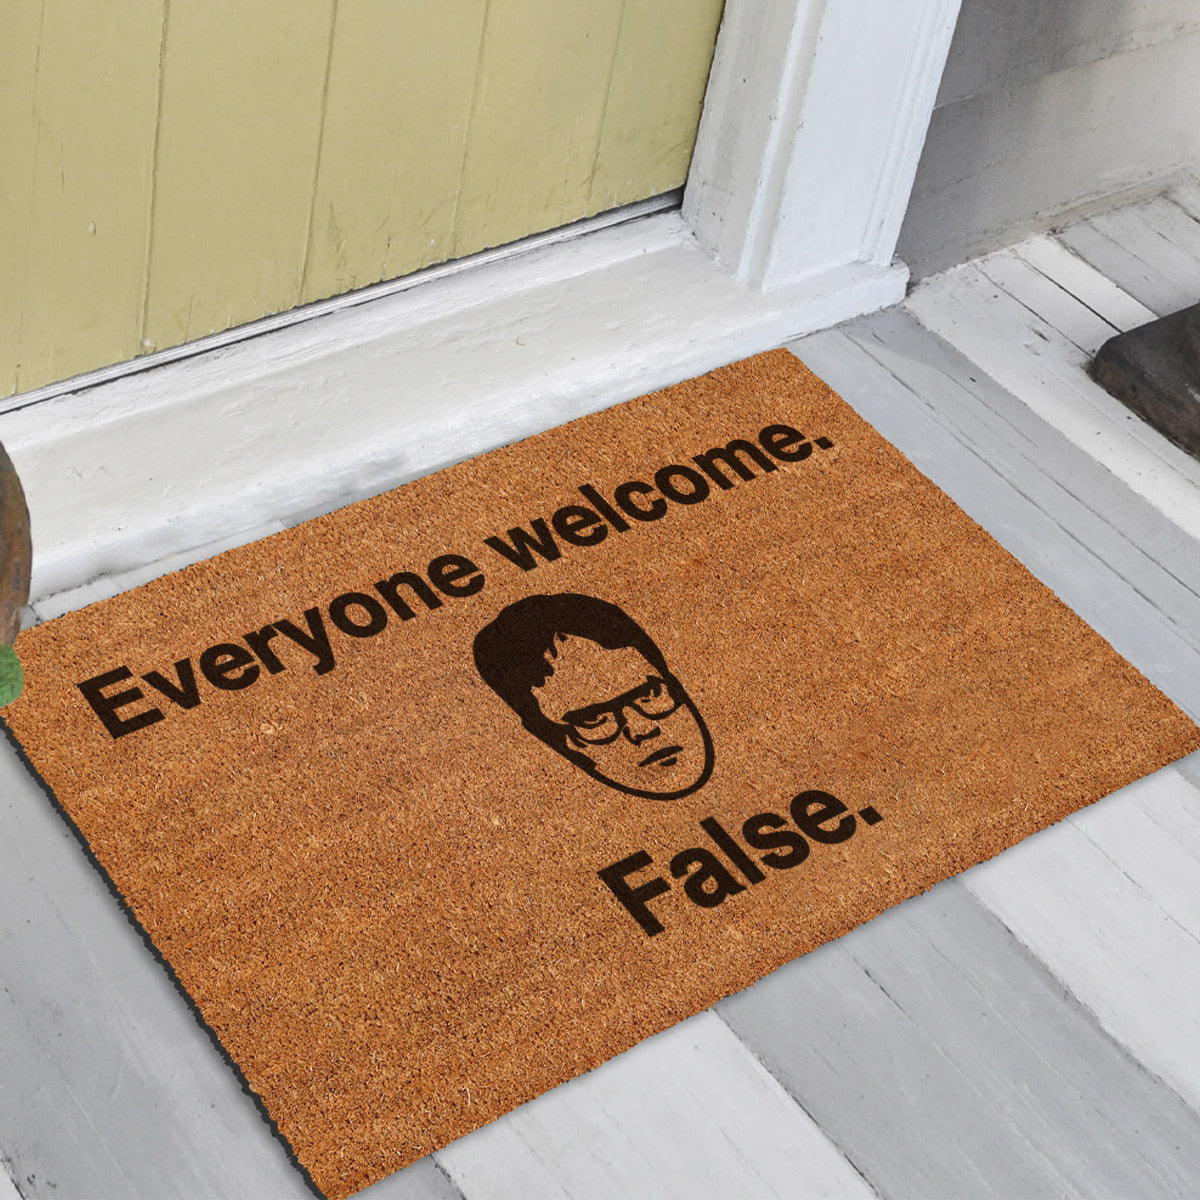 Dwight Schrute False - Doormat